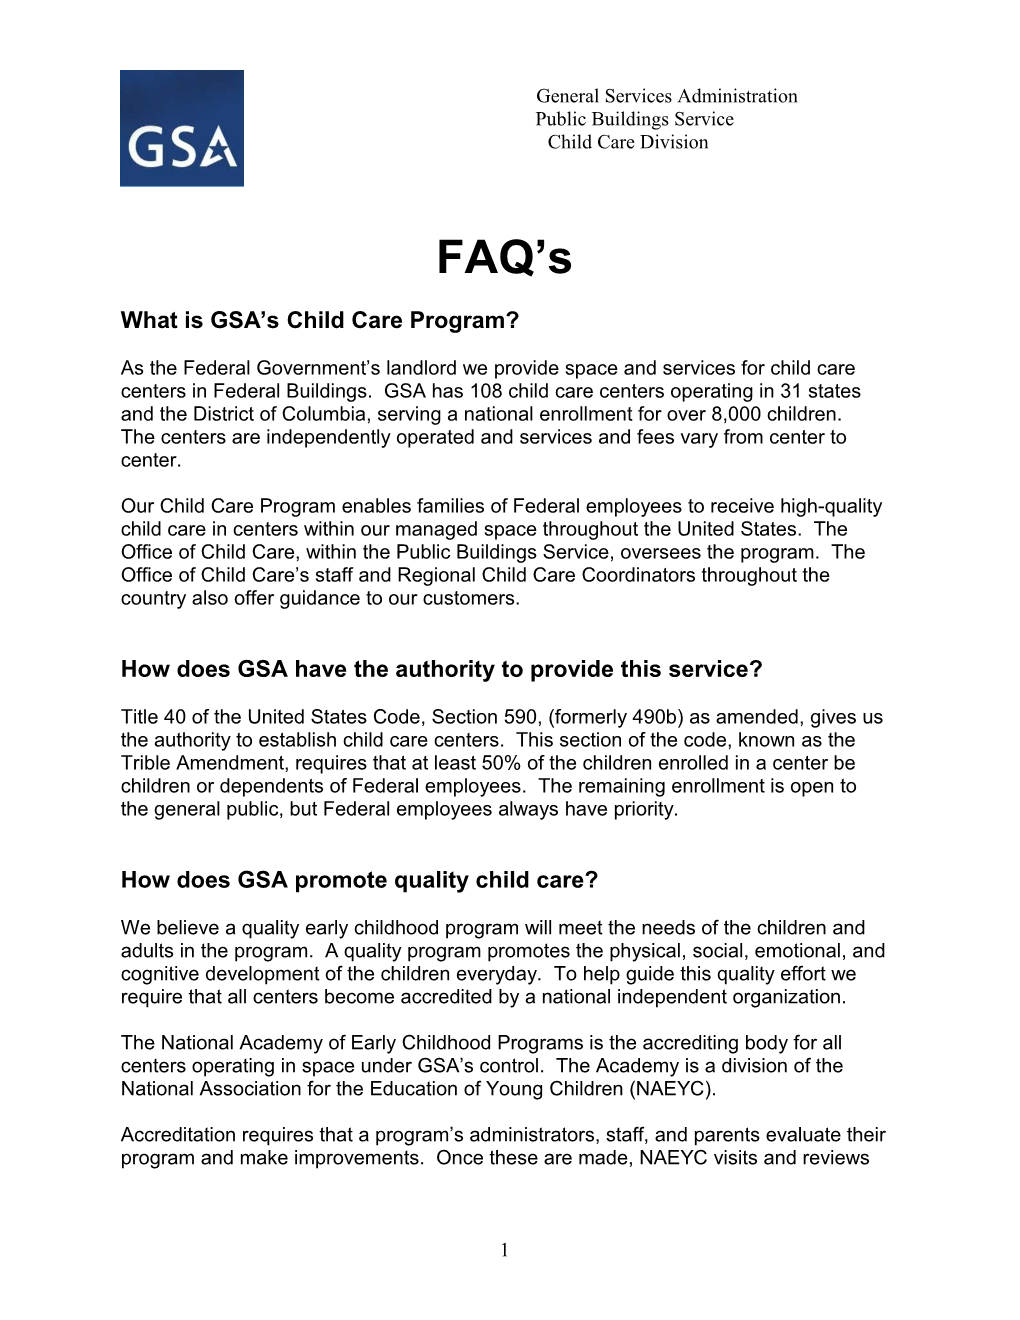 What Is GSA S Child Care Program?